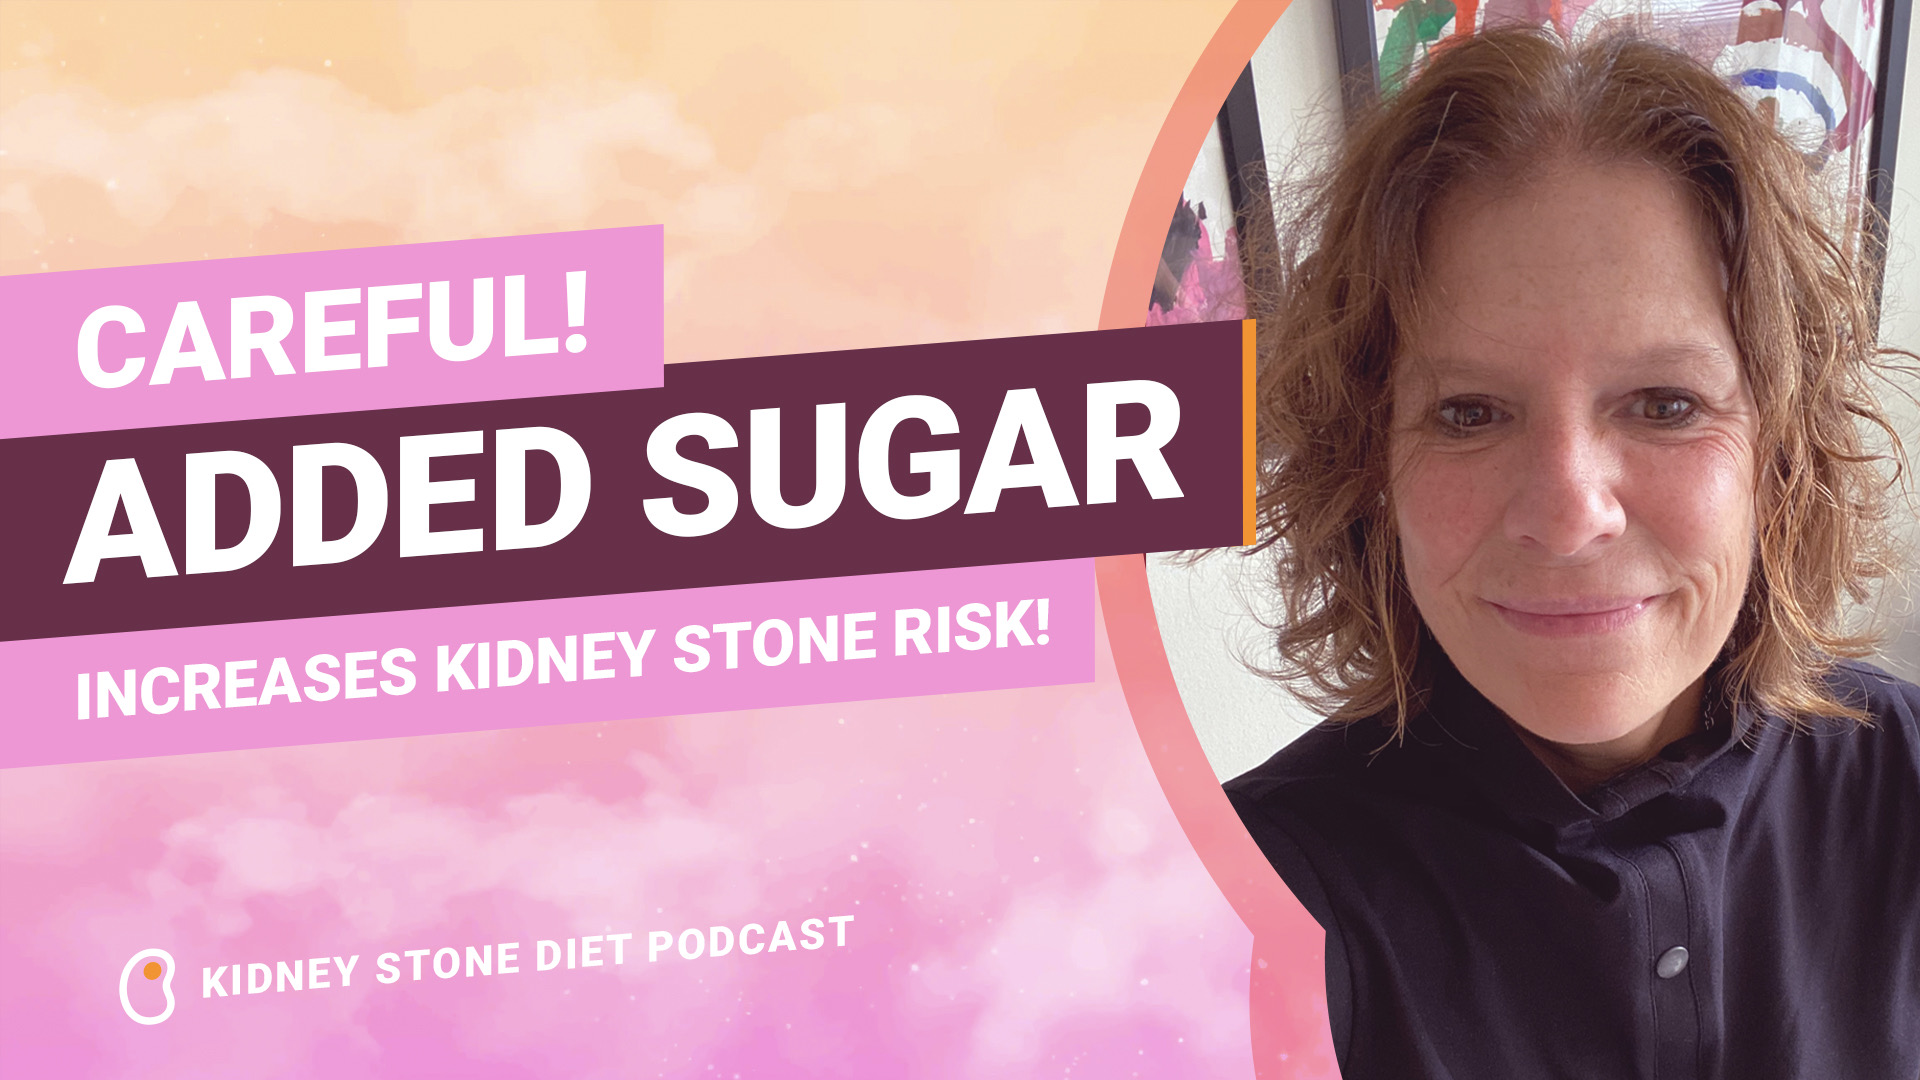 Careful! Added sugar increases kidney stone risk!